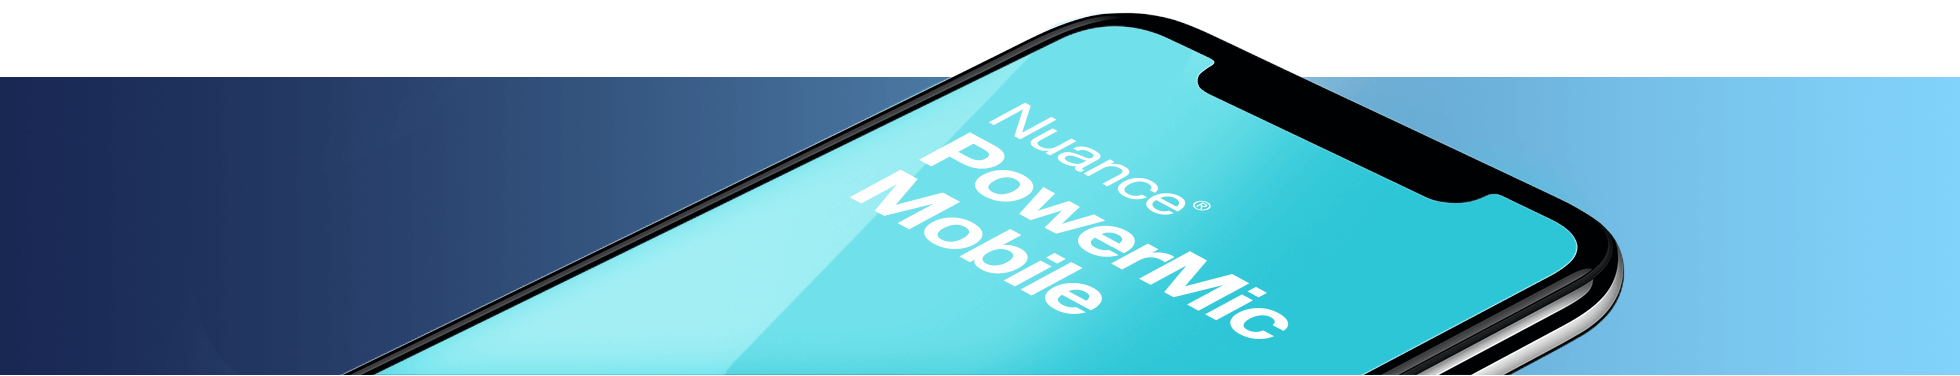 Nuance PowerMic Mobile